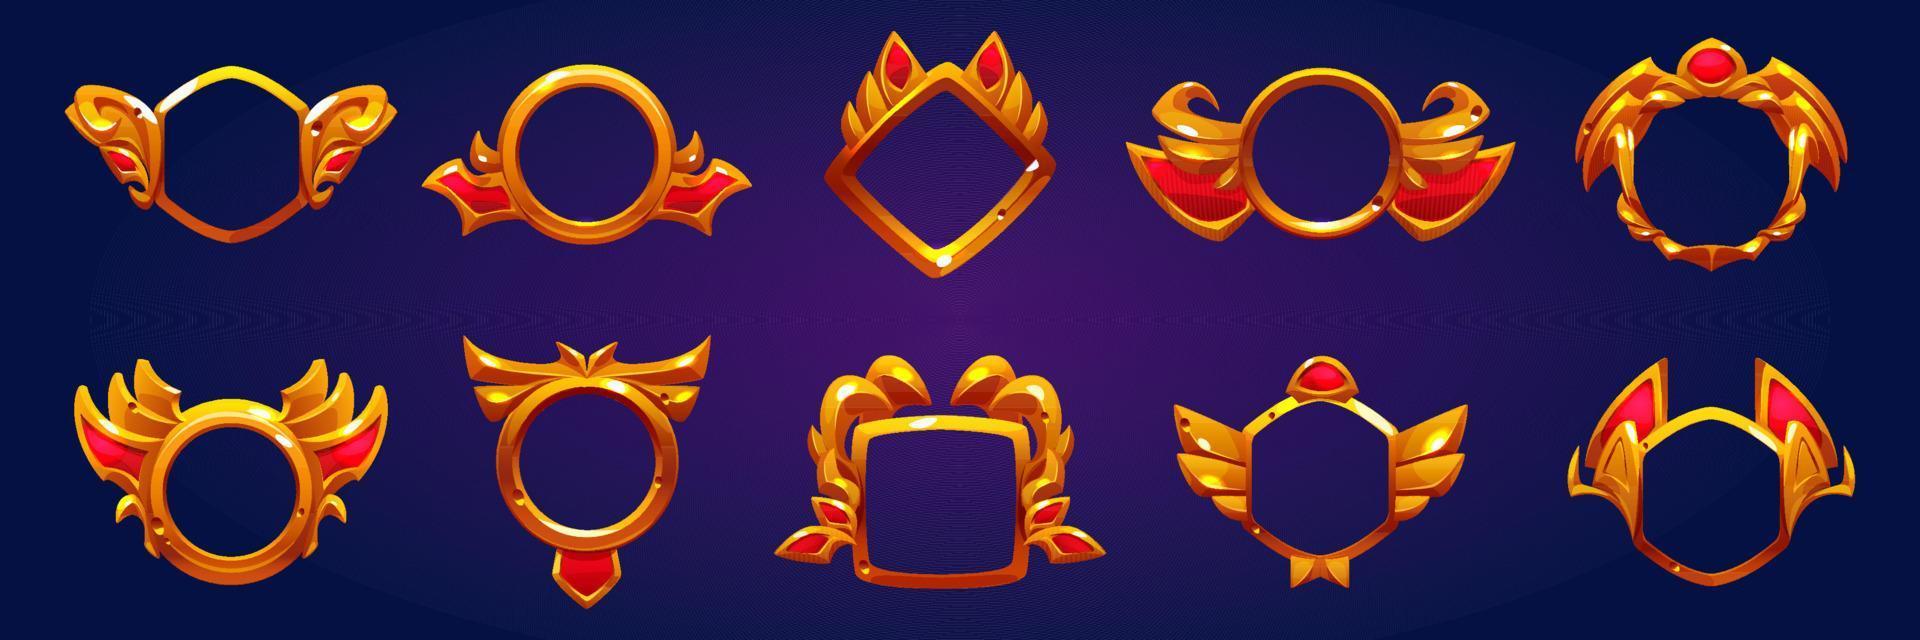 Golden award badges, game avatar frames vector